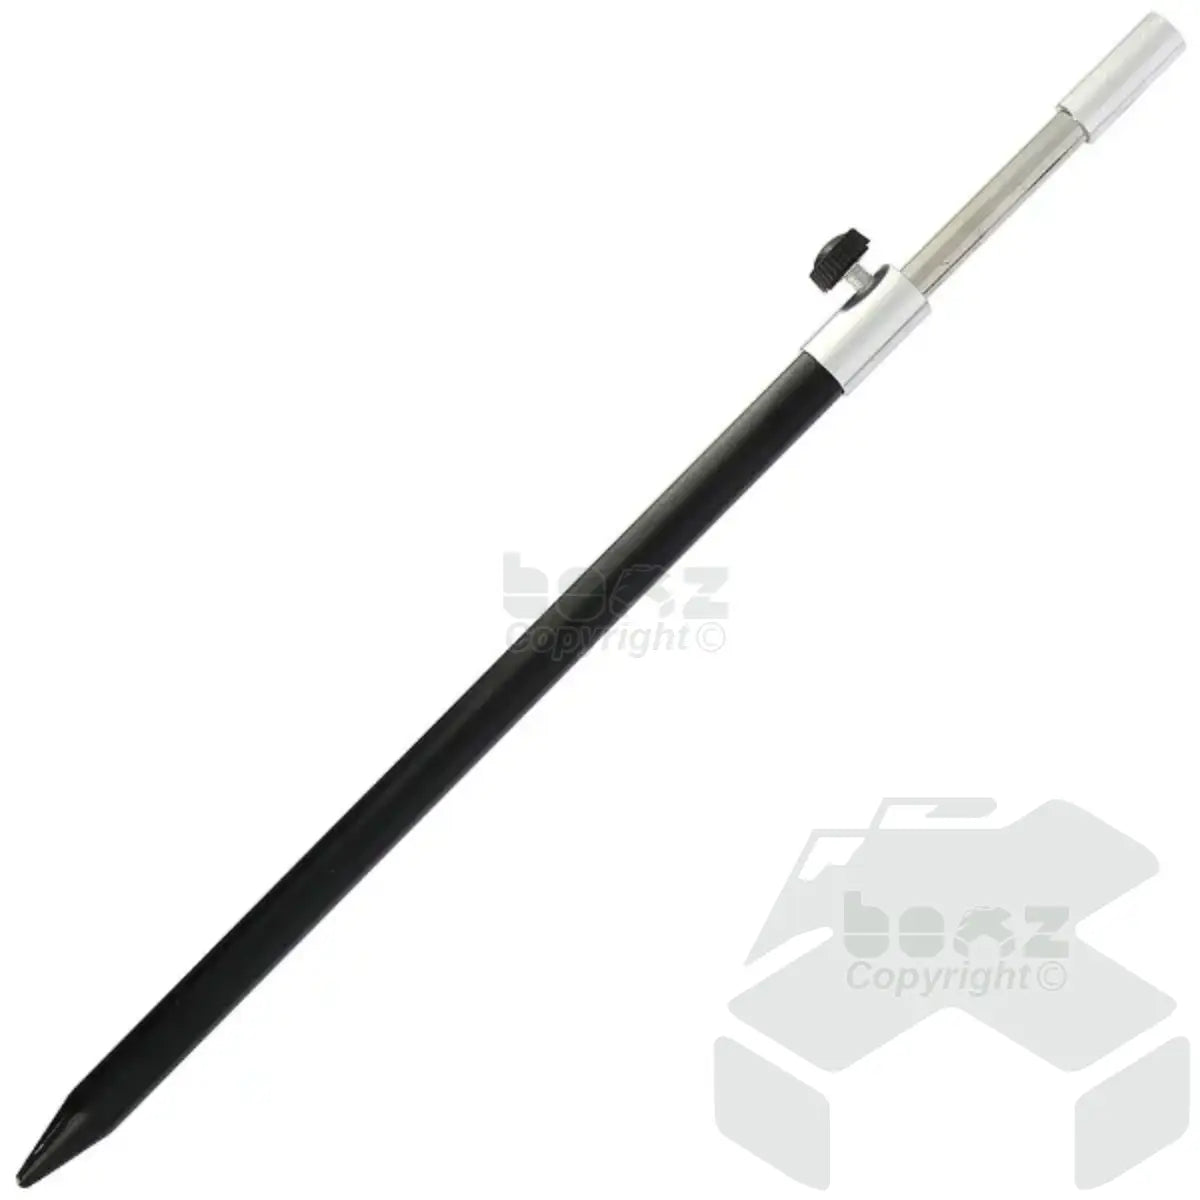 NGT Aluminium Bank Stick - 30-50cm (Medium)